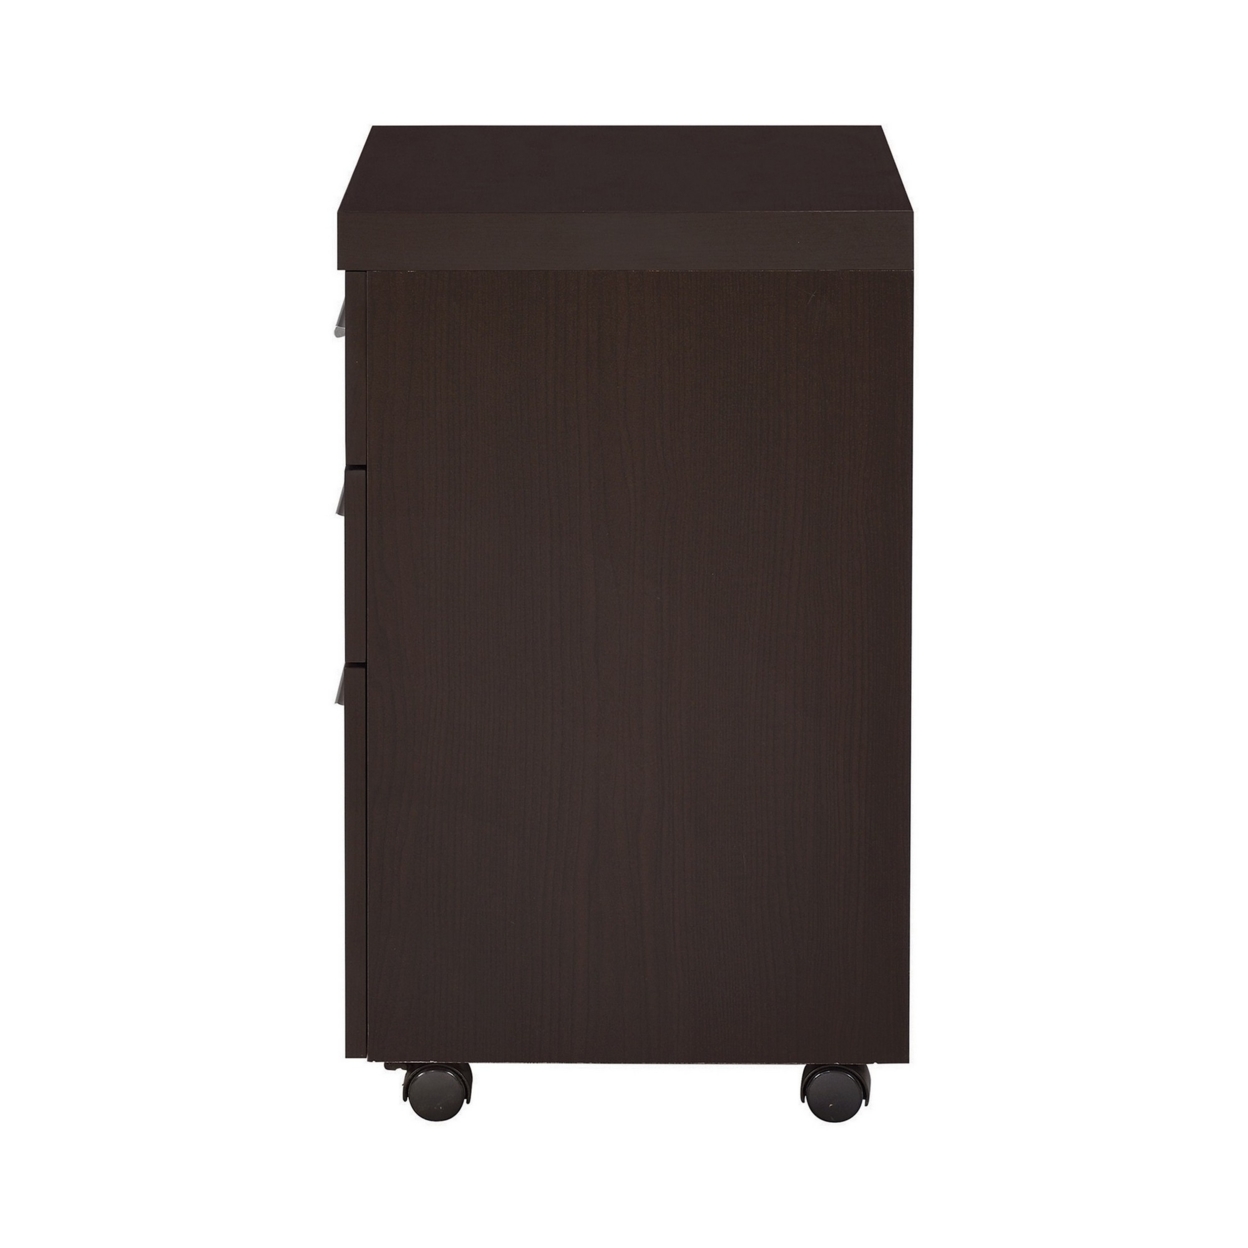 27 Inch Modern 3 Drawer Mobile Storage Cabinet, Wheels, Cappuccino Brown- Saltoro Sherpi